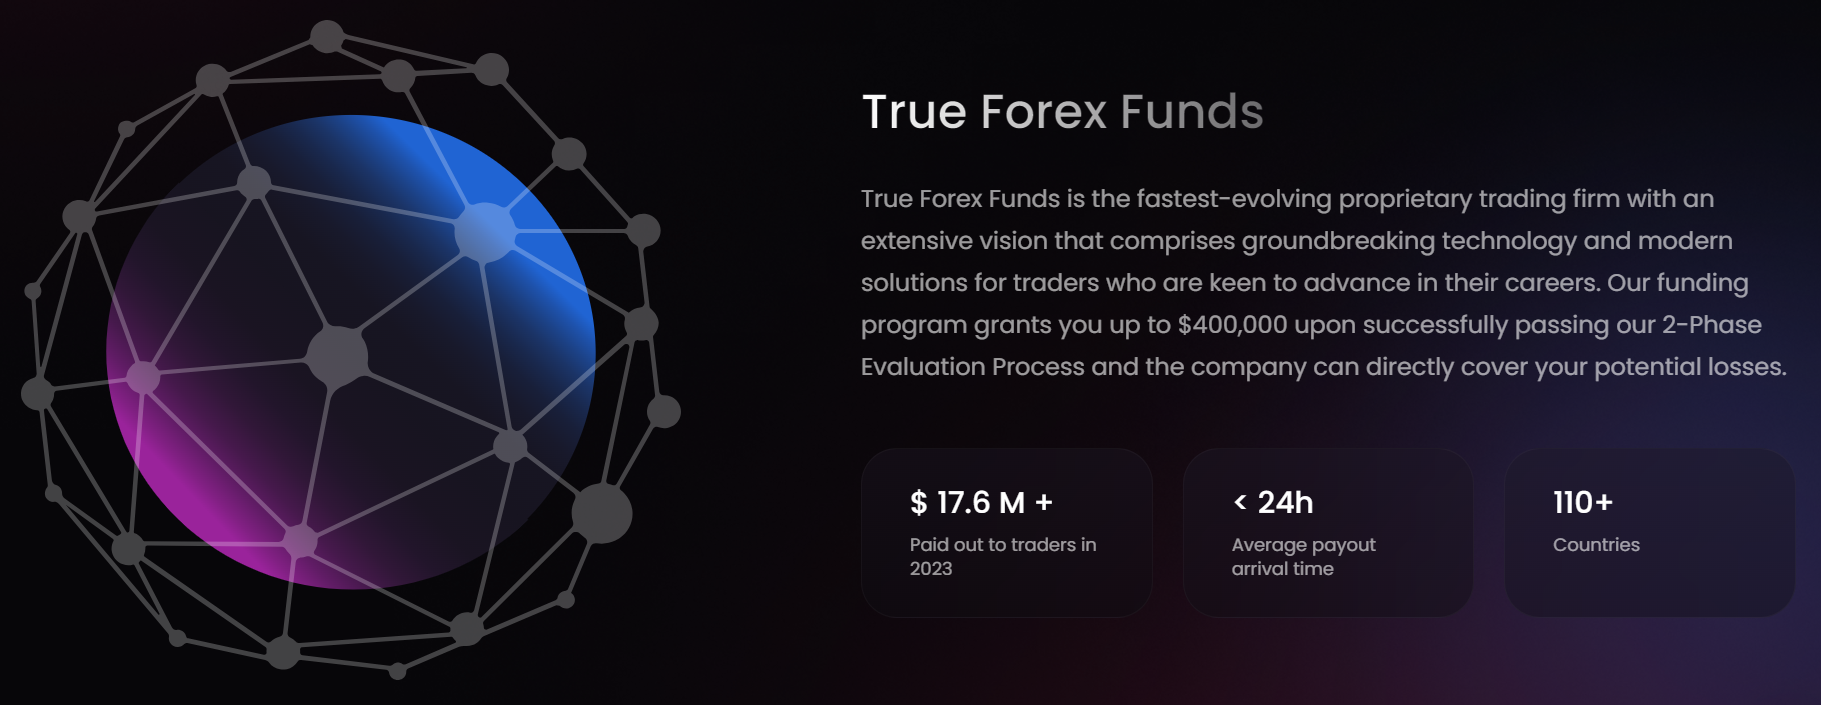 True Forex Funds